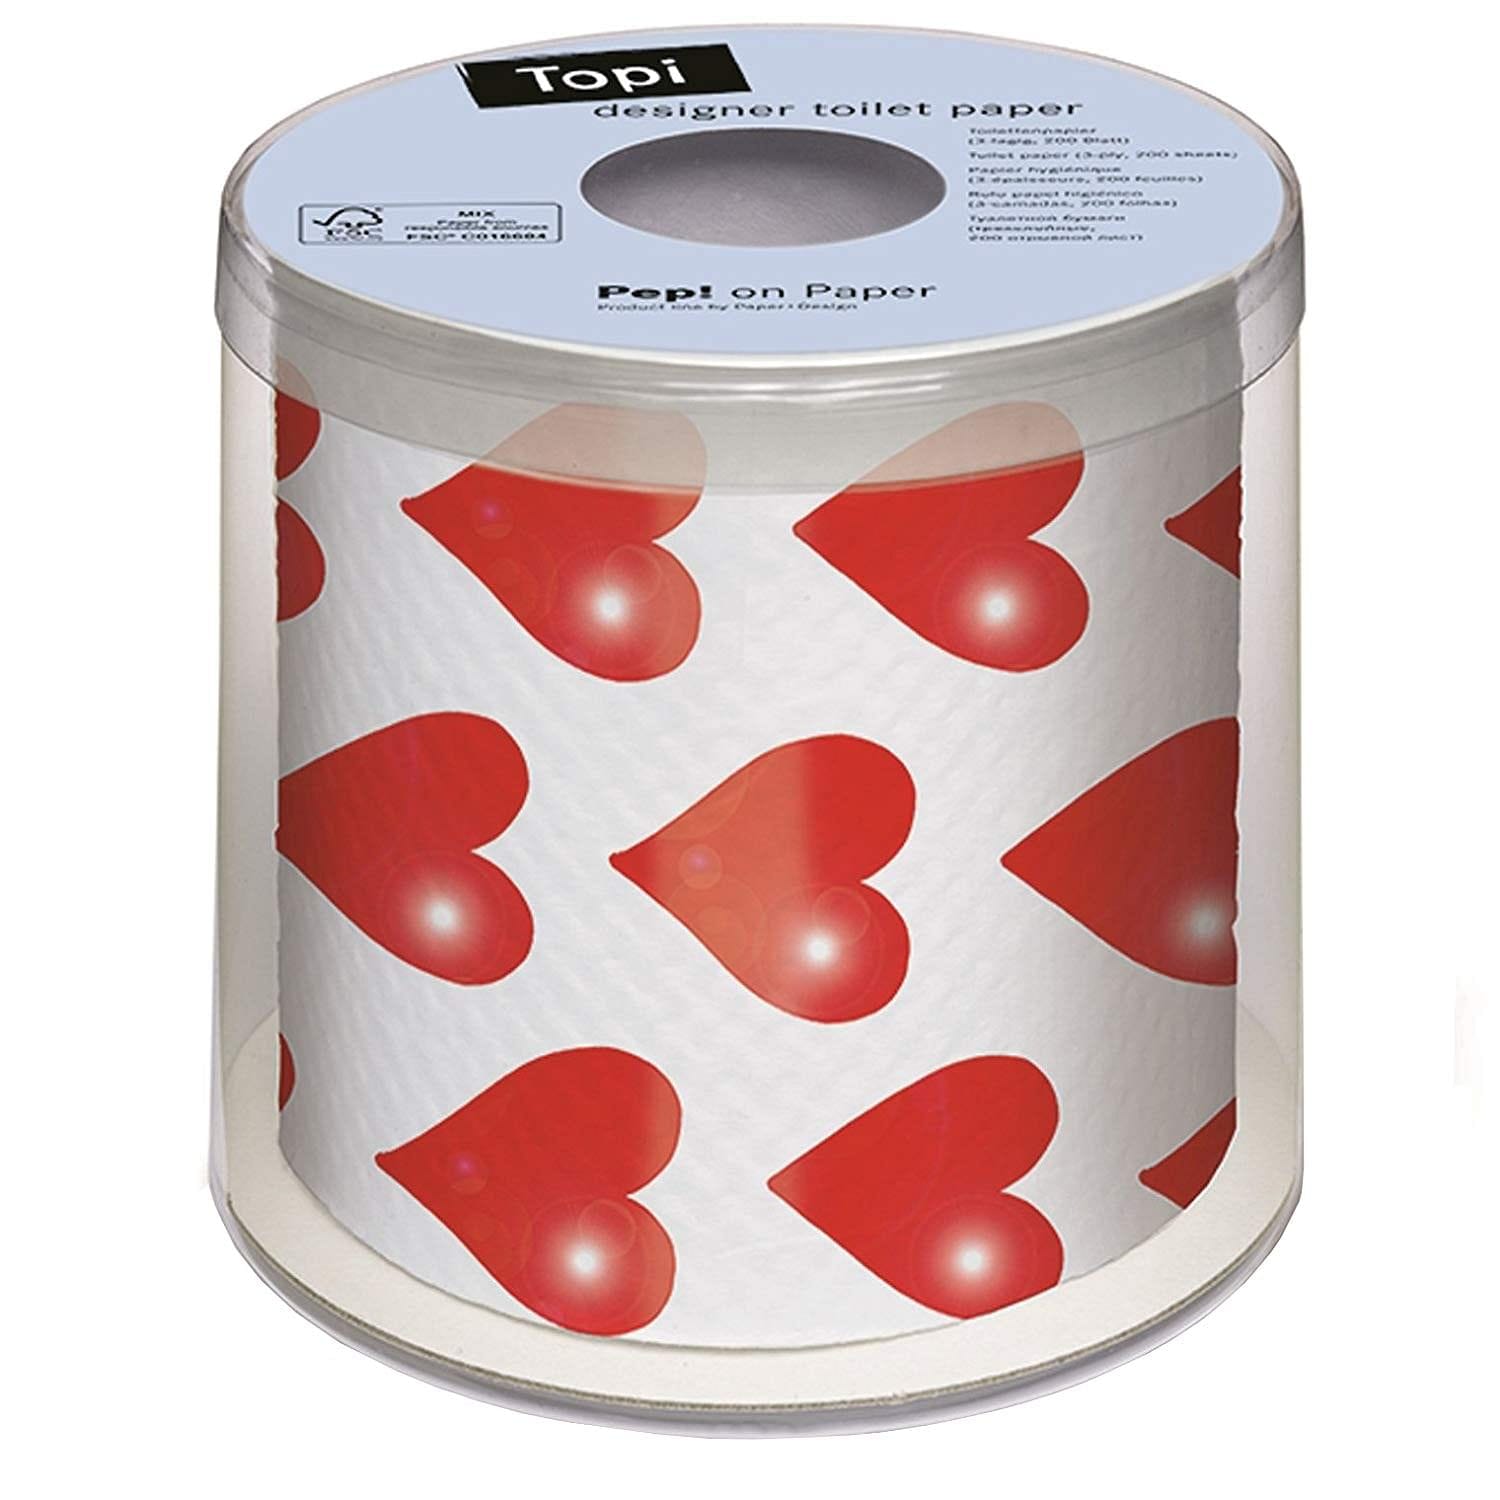 Topi Designer Toilet Paper - Hearts